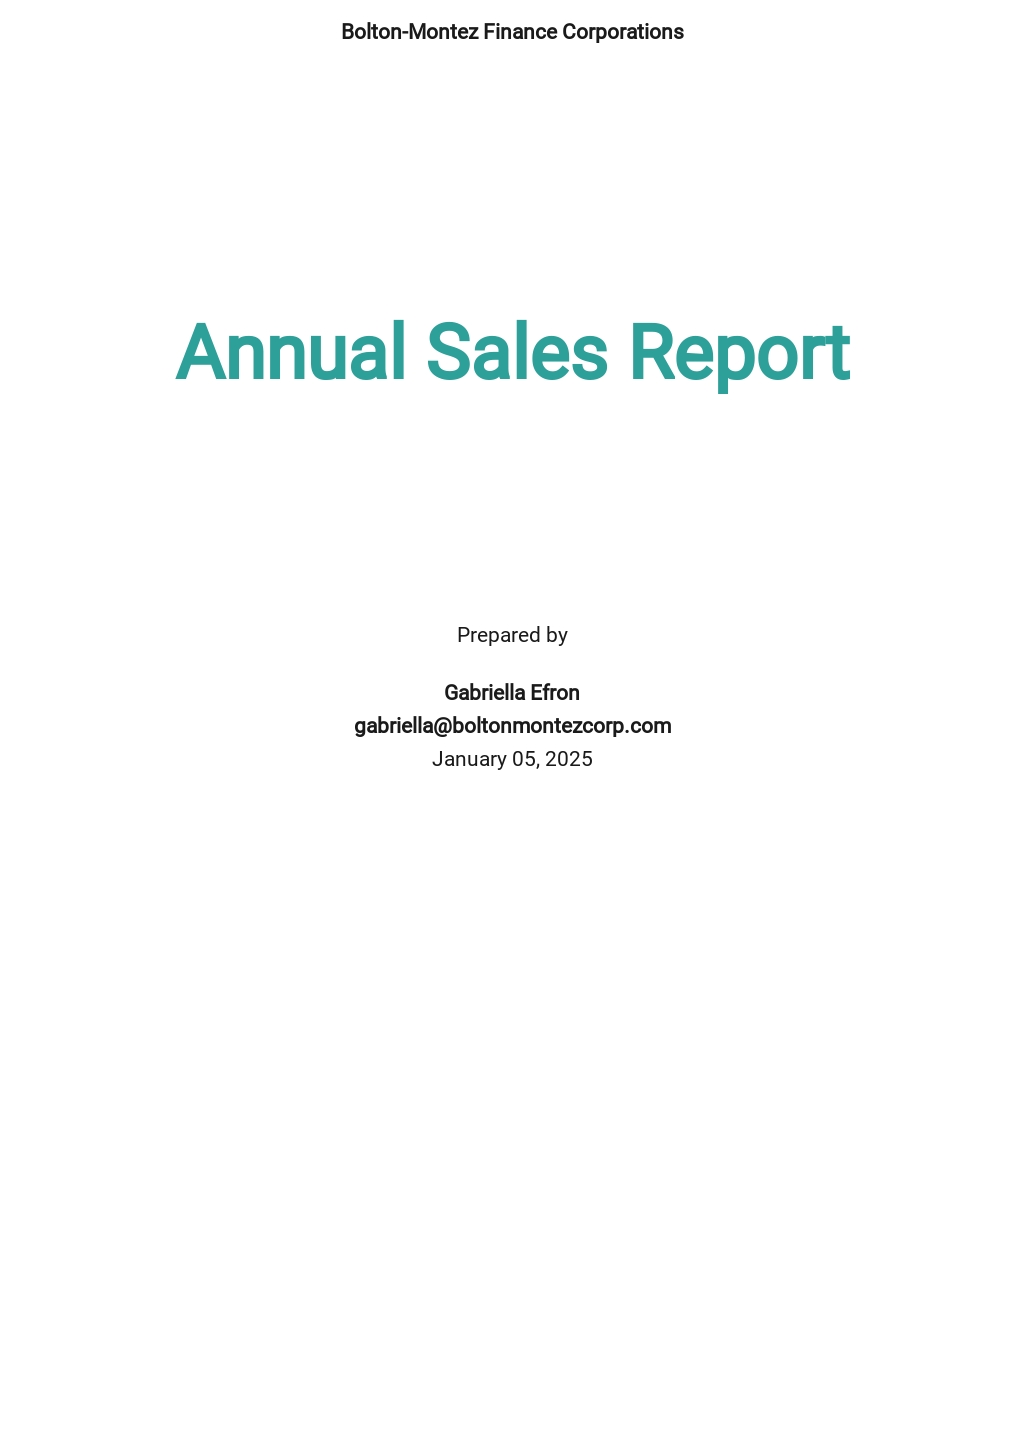 Annual Sales Report Template.jpe